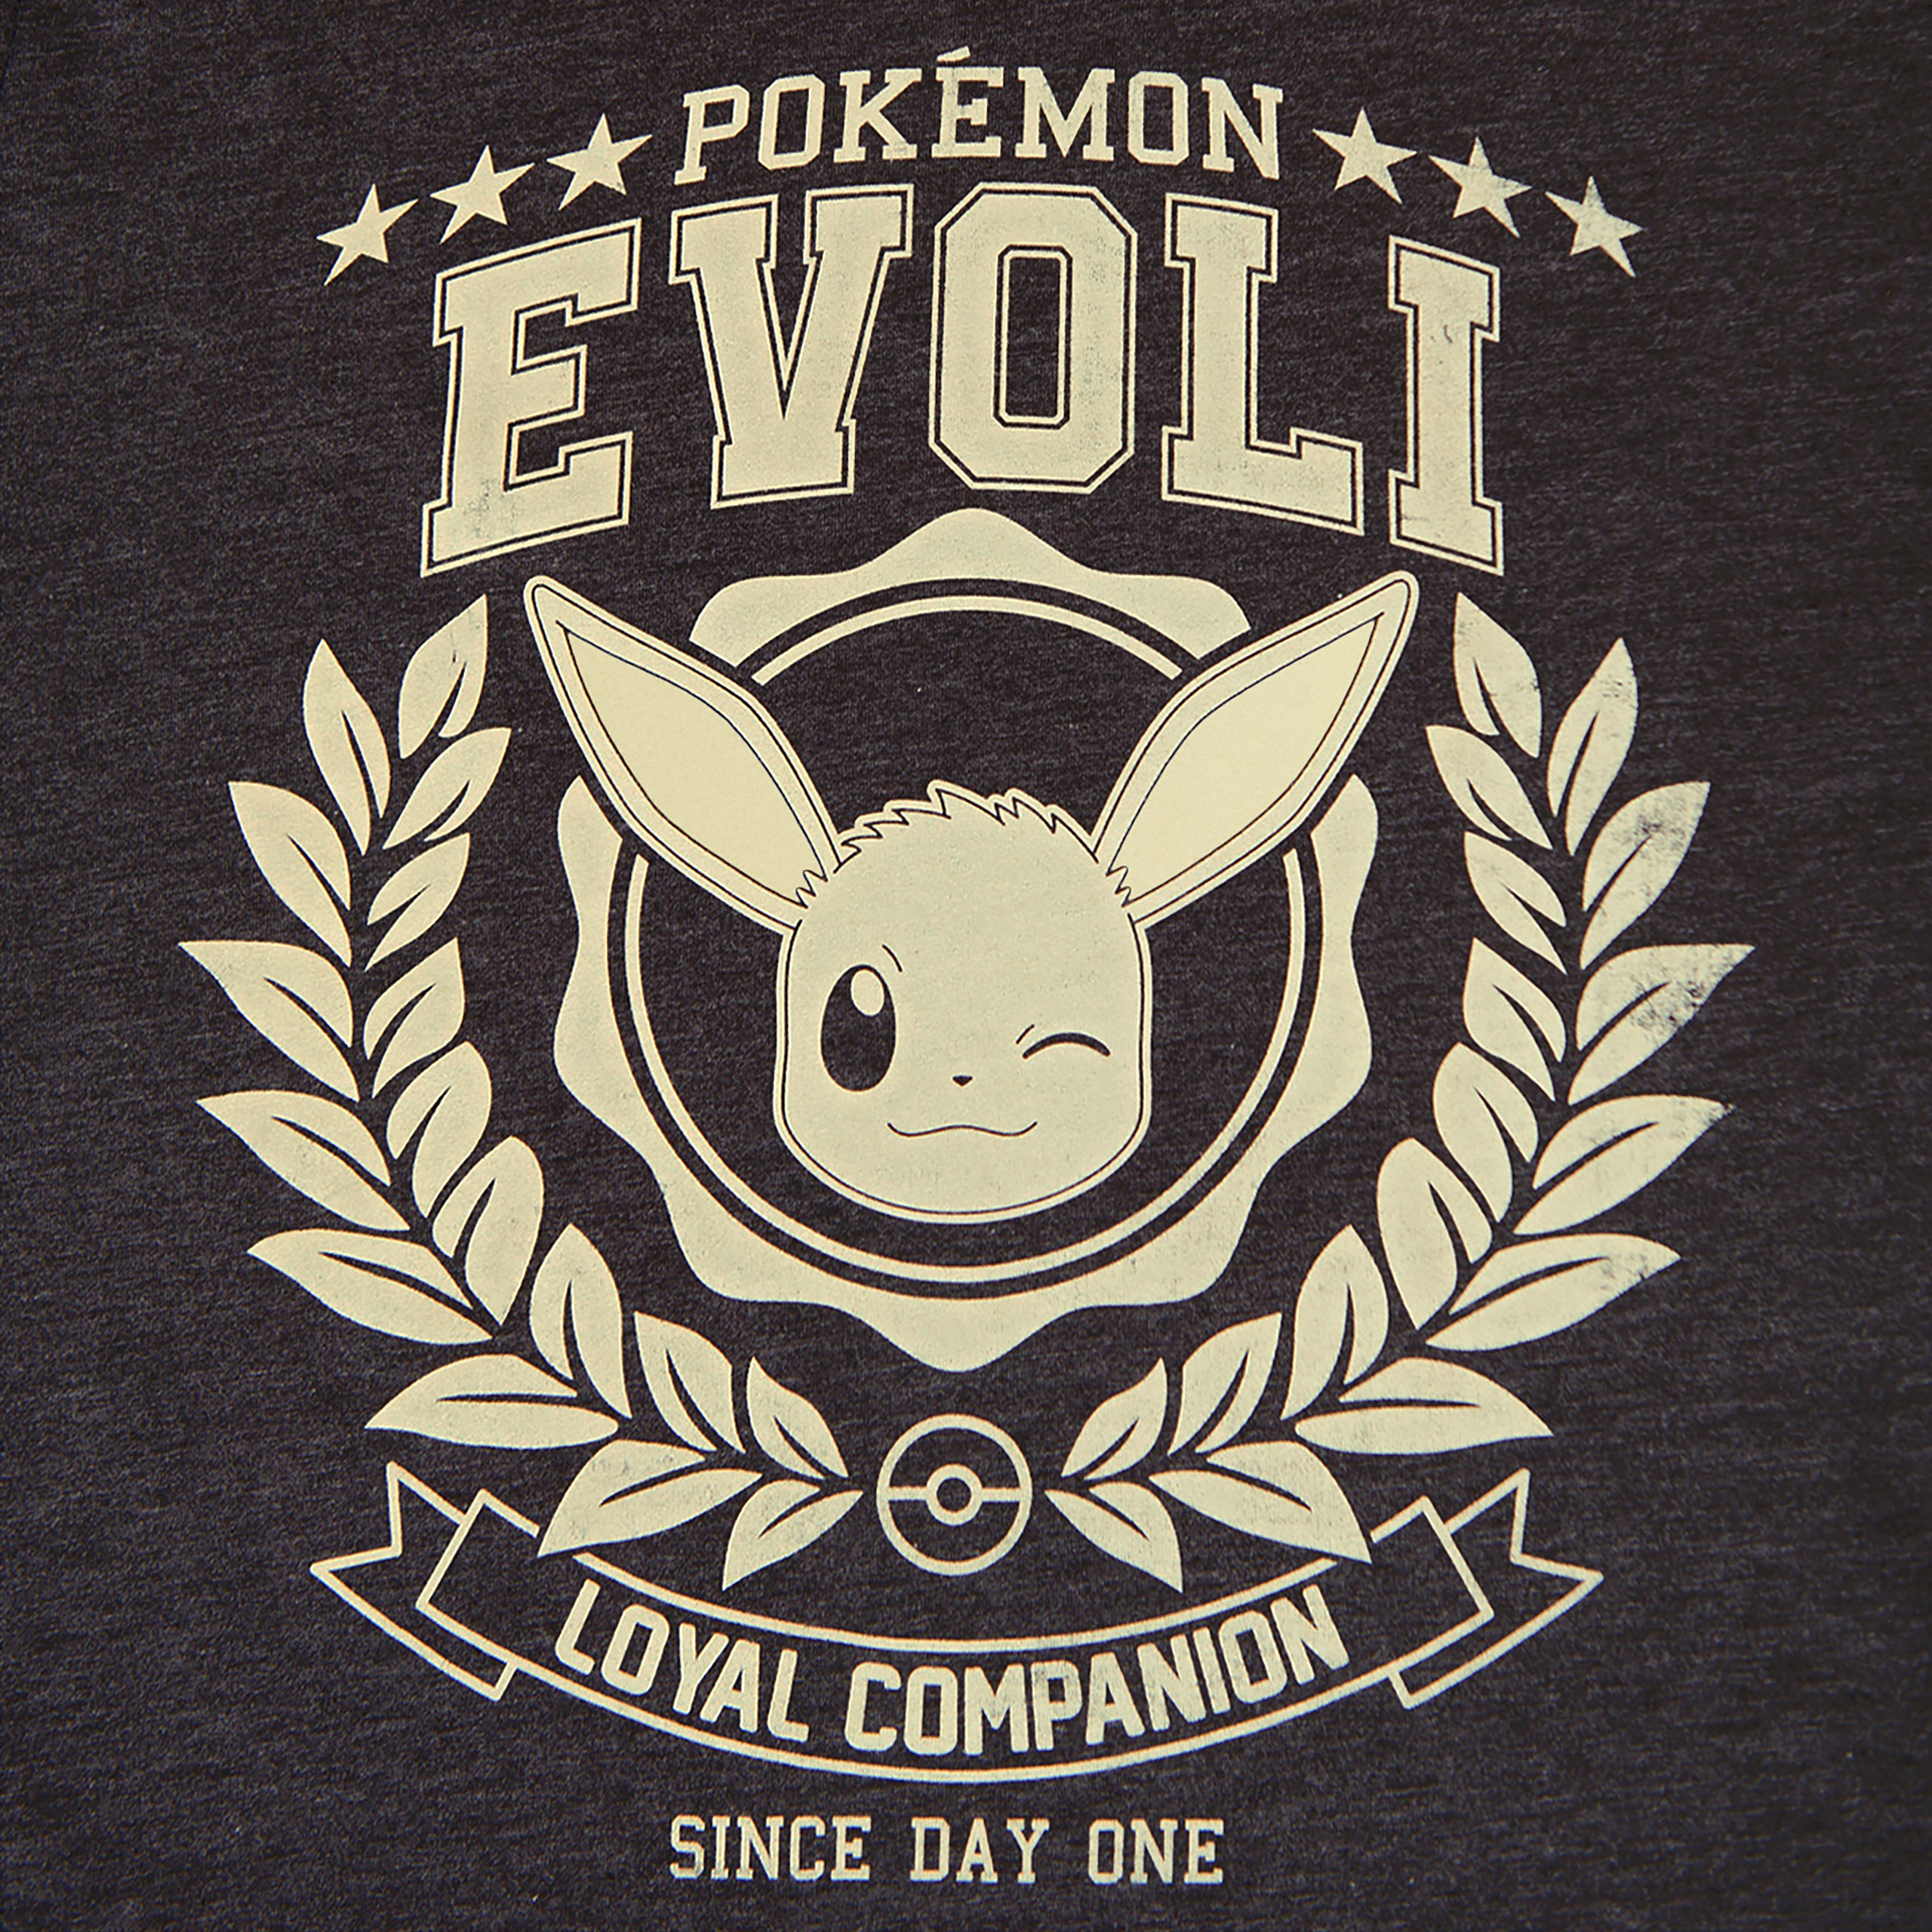 Pokemon - Eevee Loyal Companion T-Shirt grey